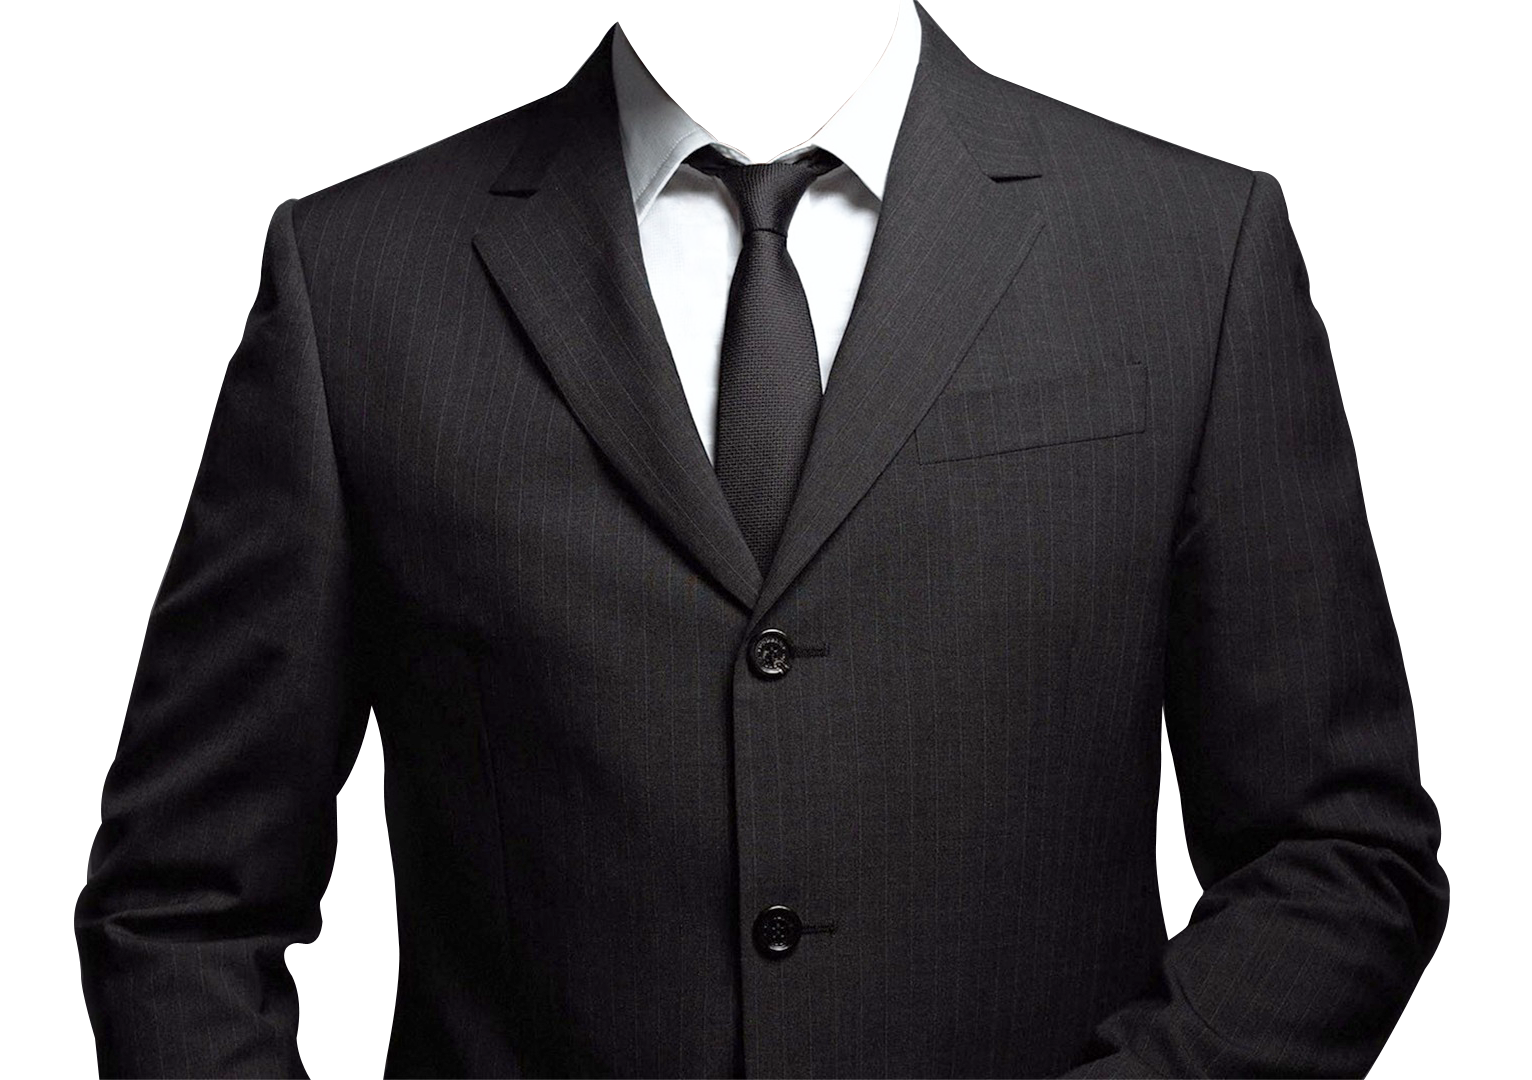 Tie Blazer Black Suit Free Download Image PNG Image